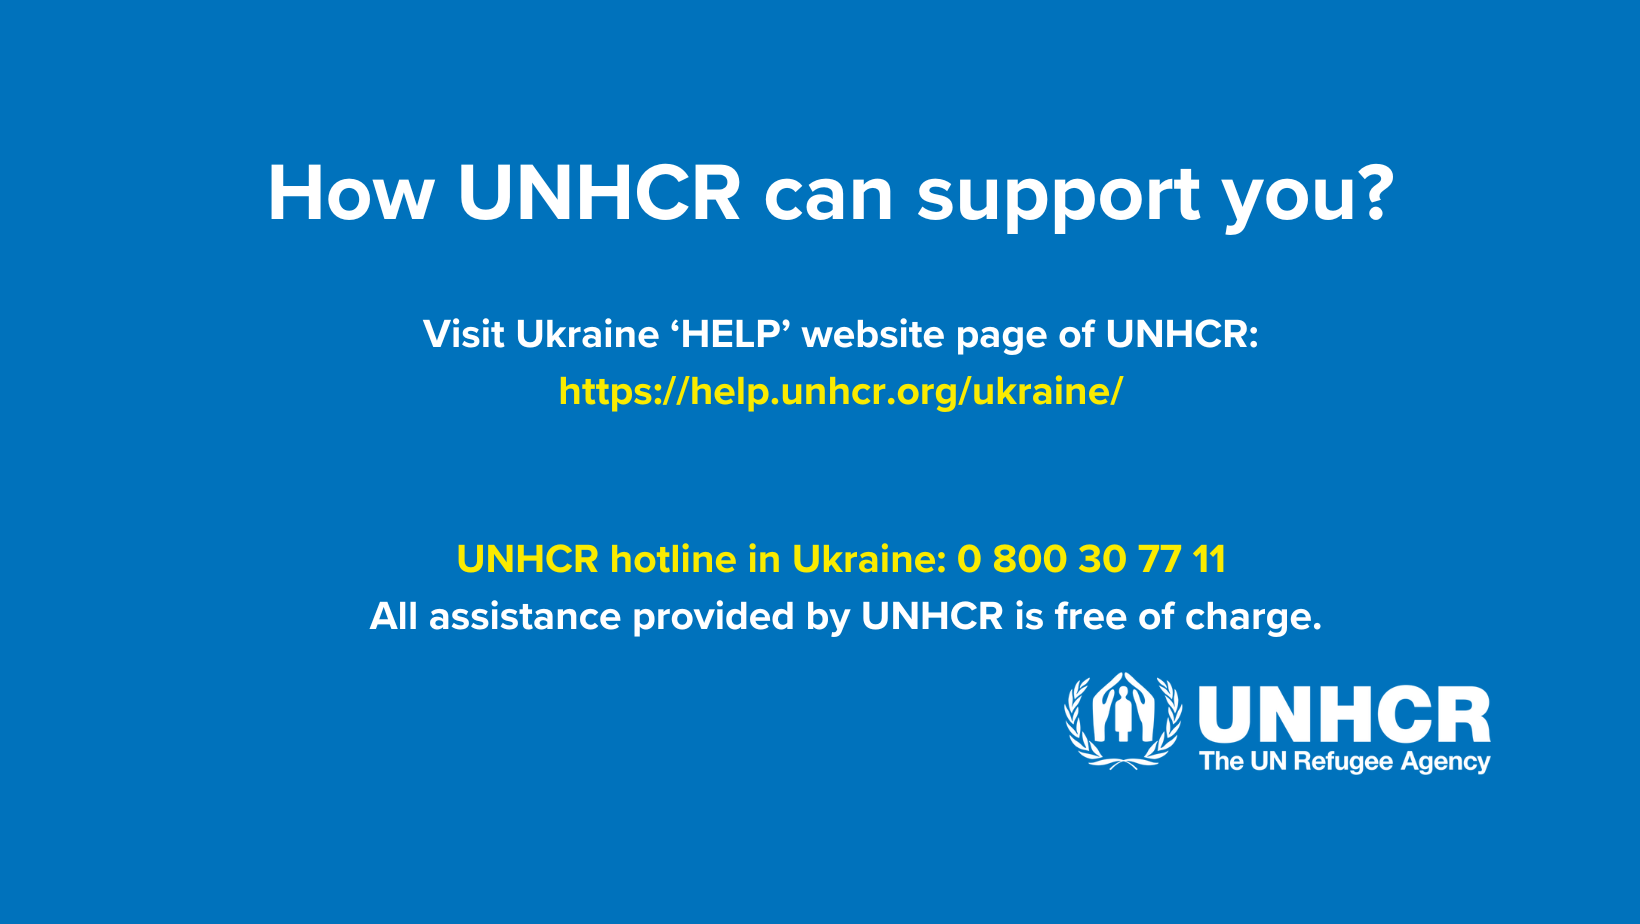 www.unhcr.org